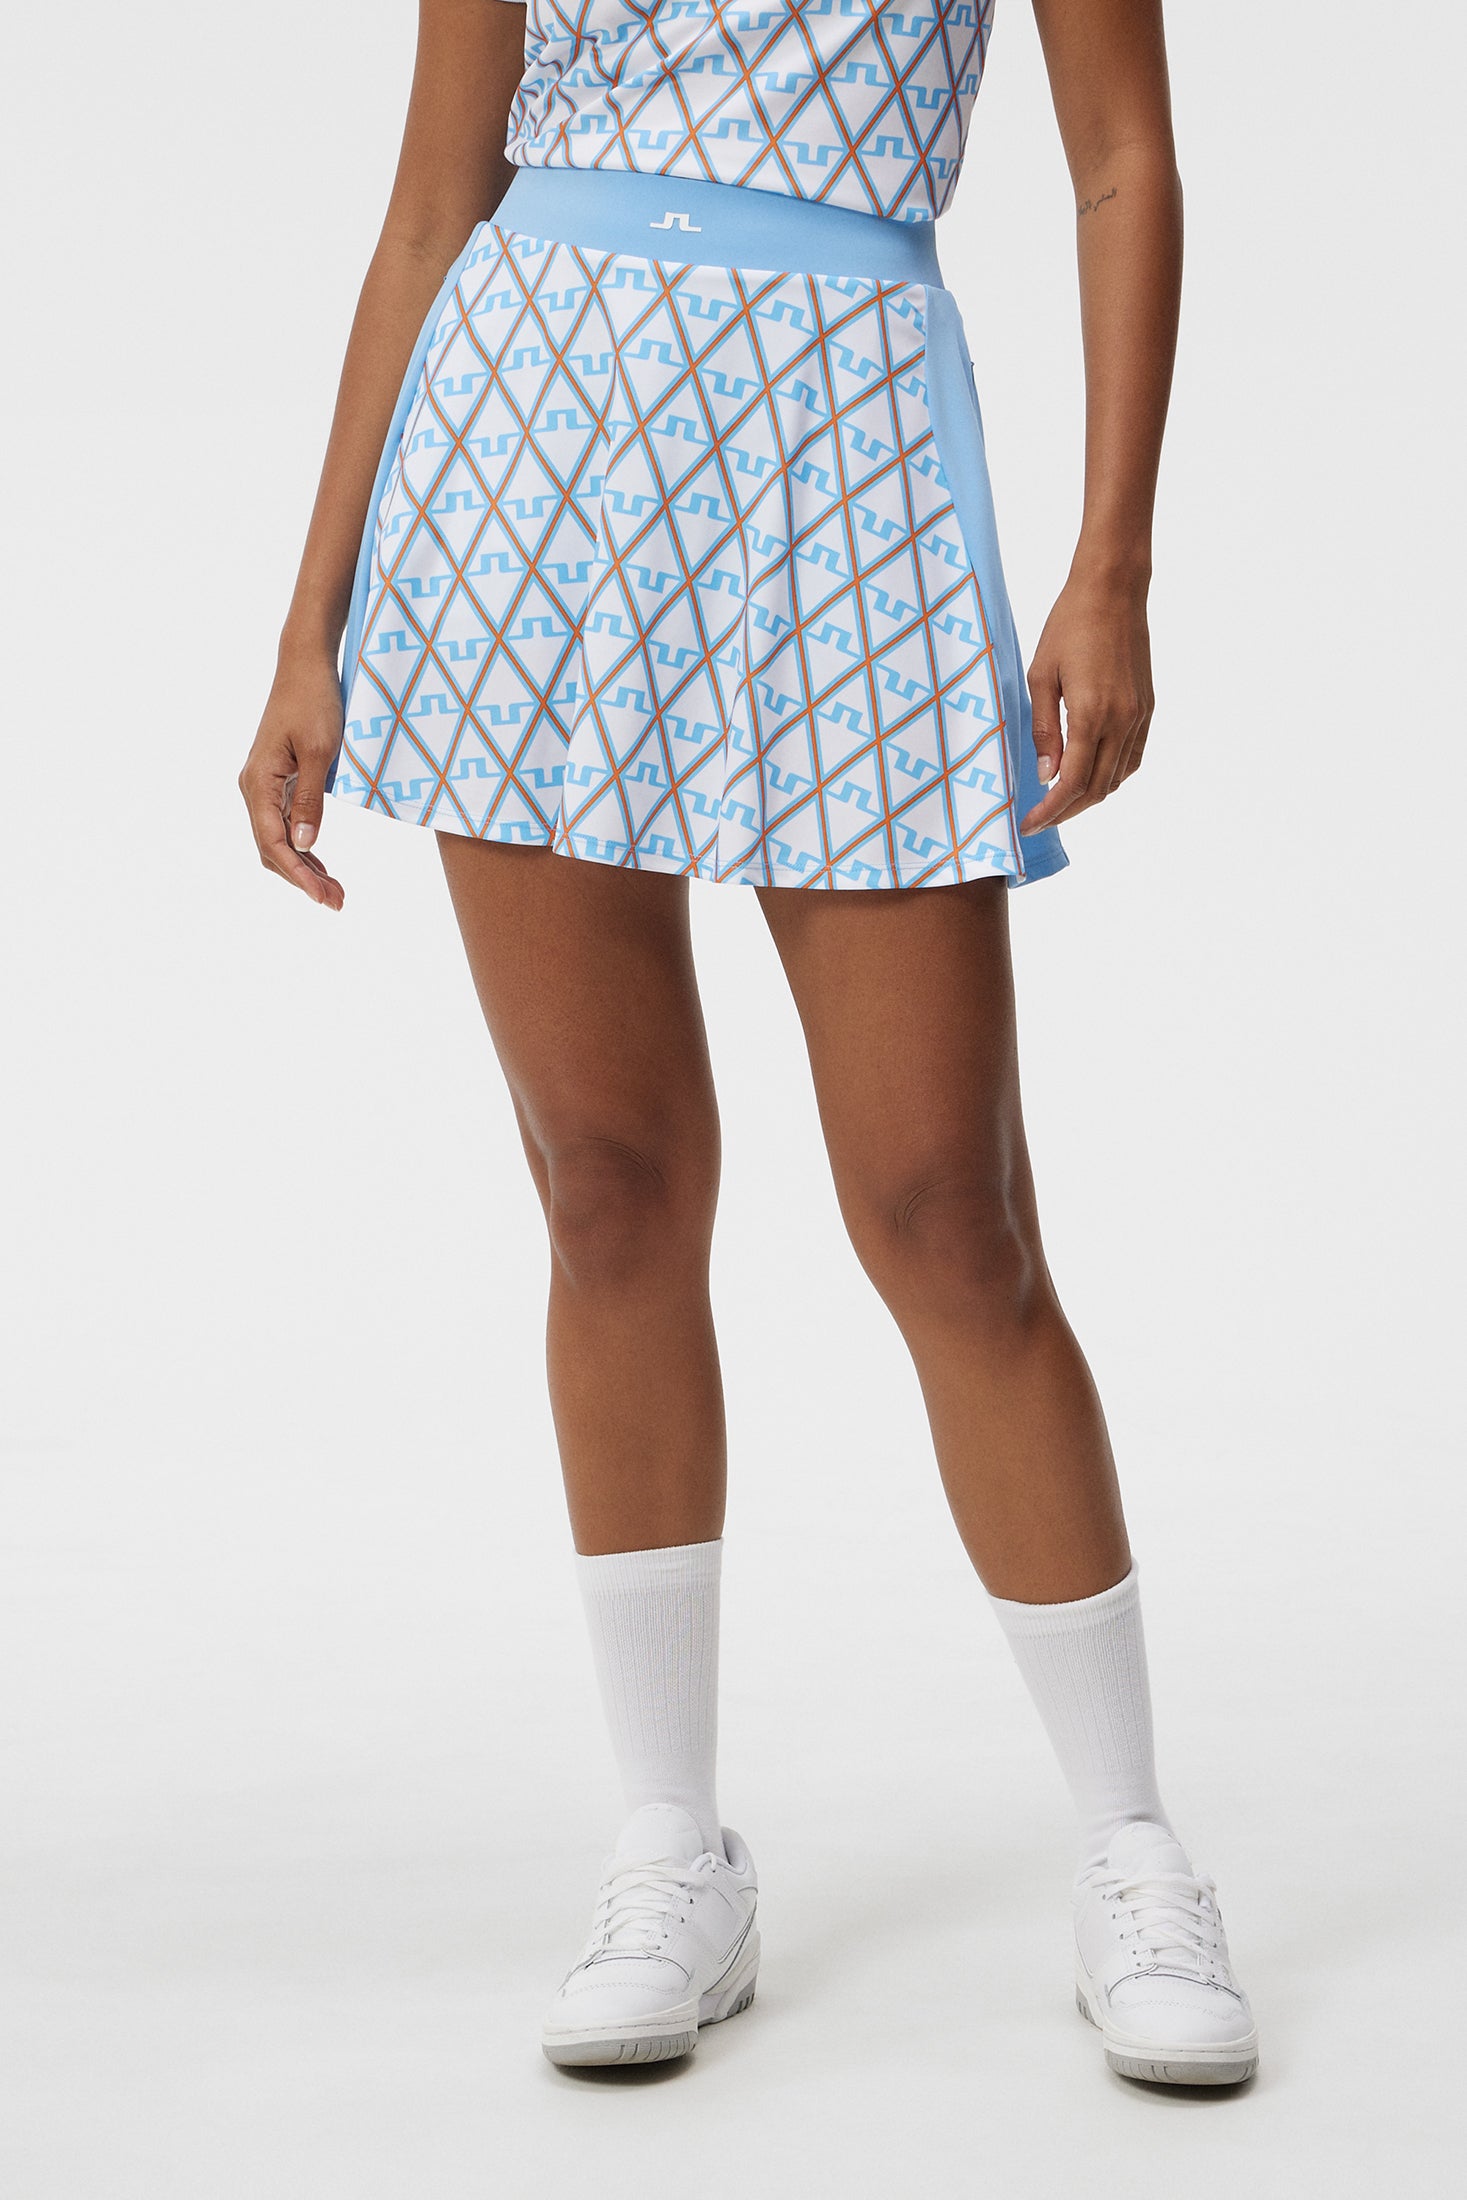 Jenny Print Skirt